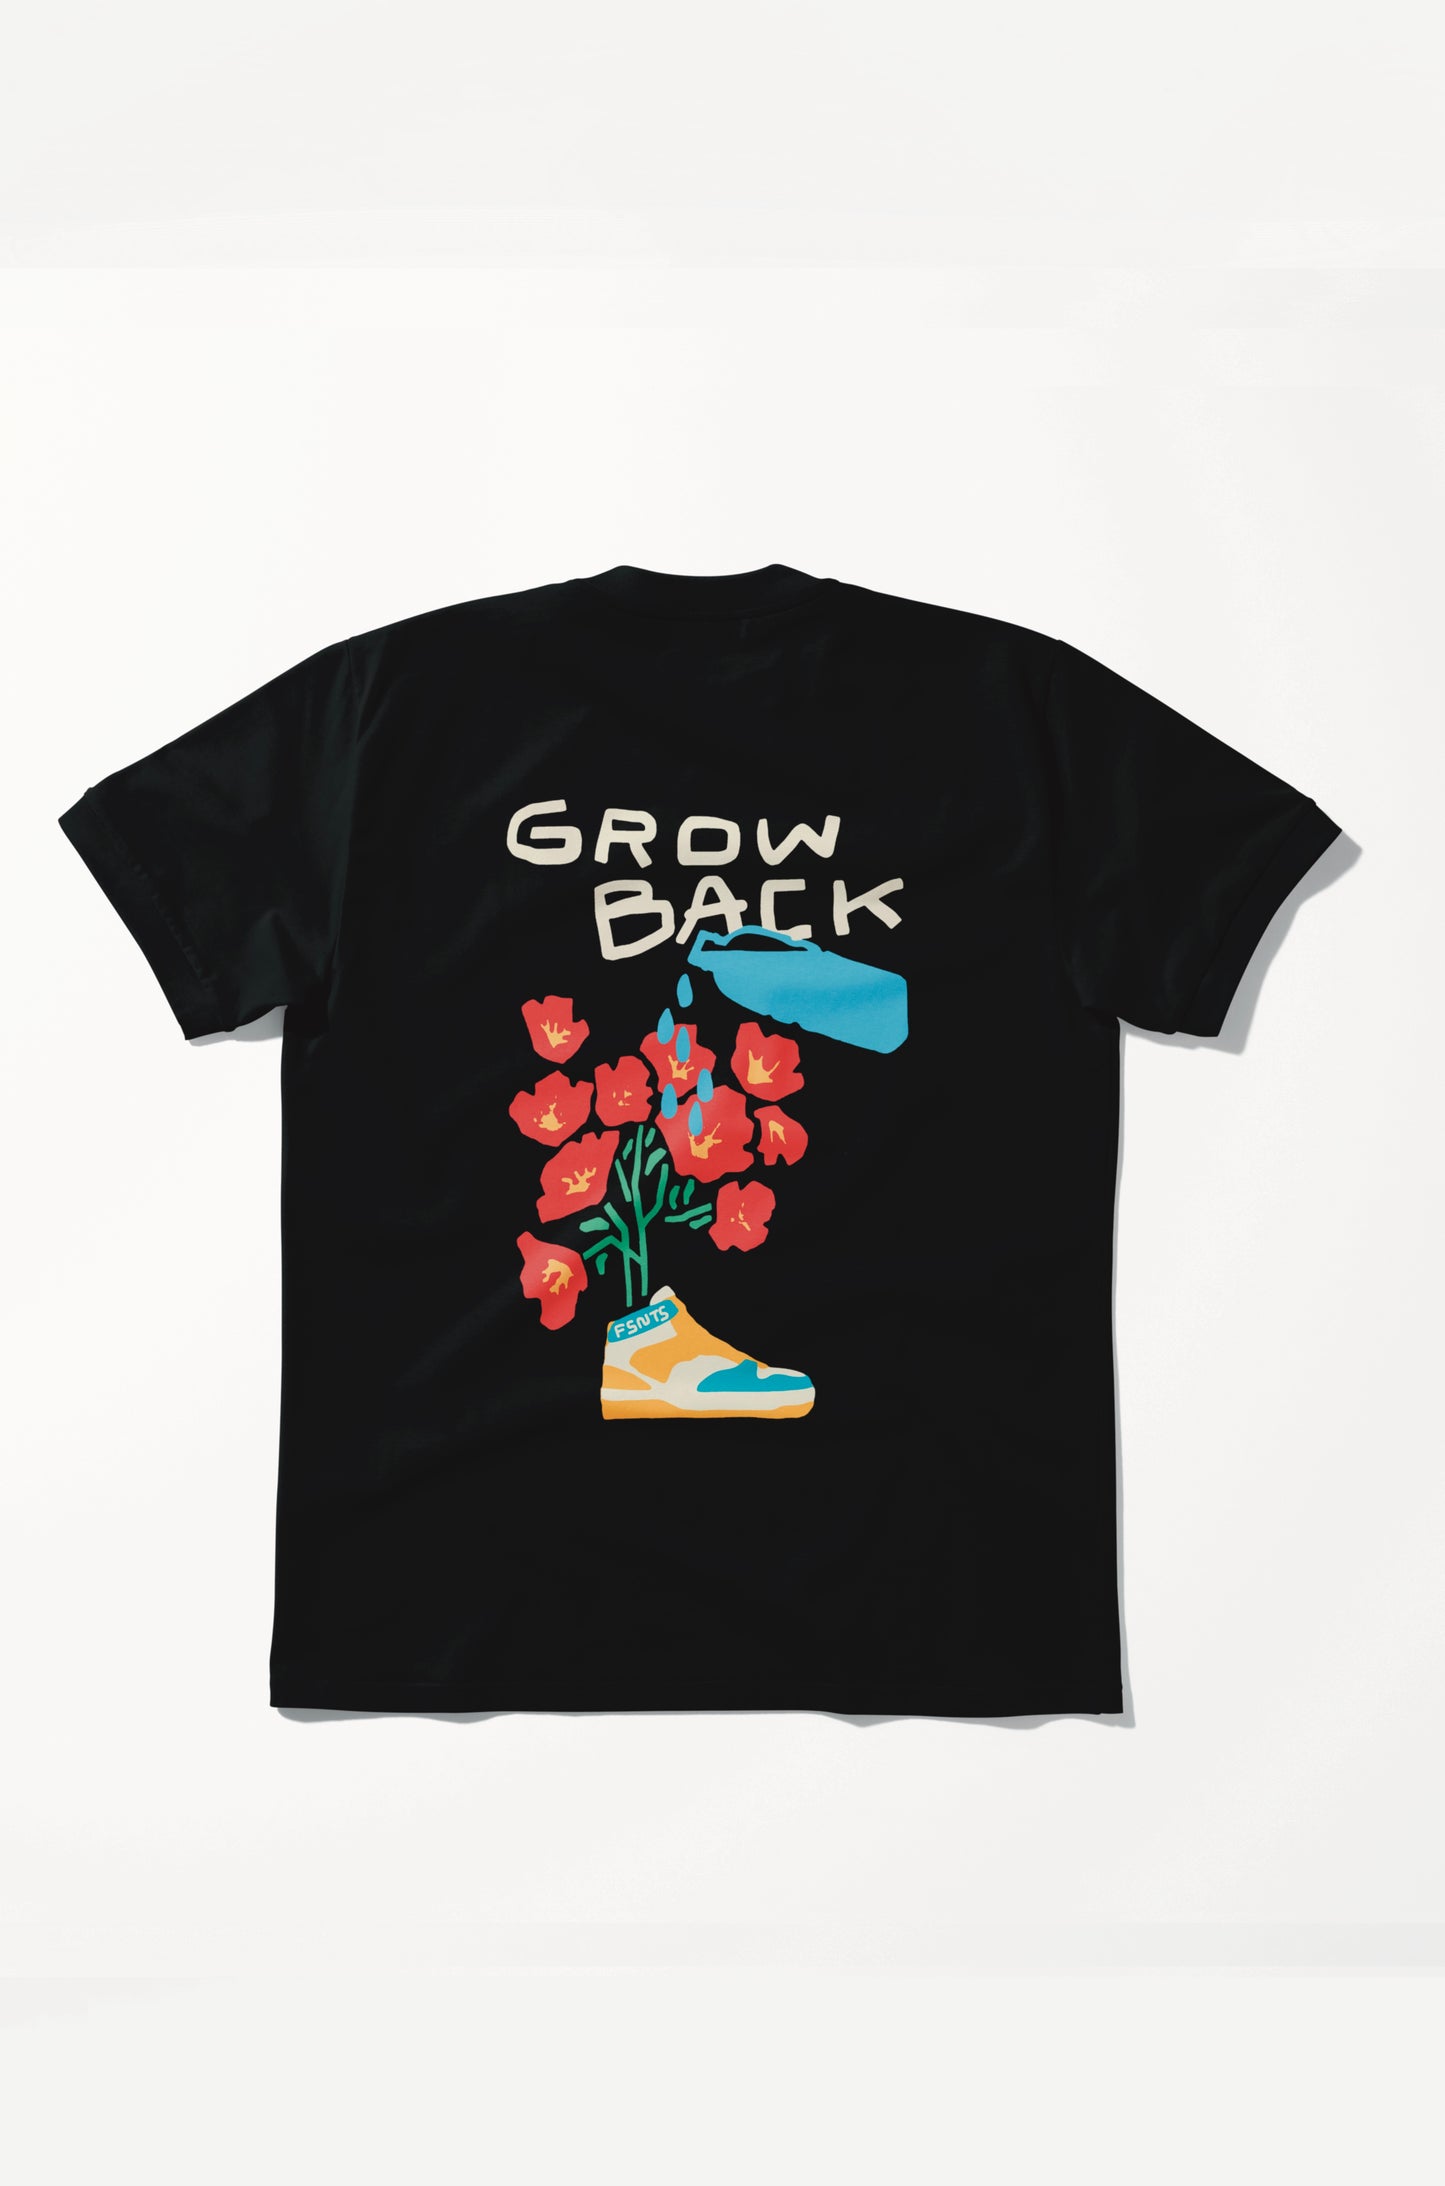 Grow back